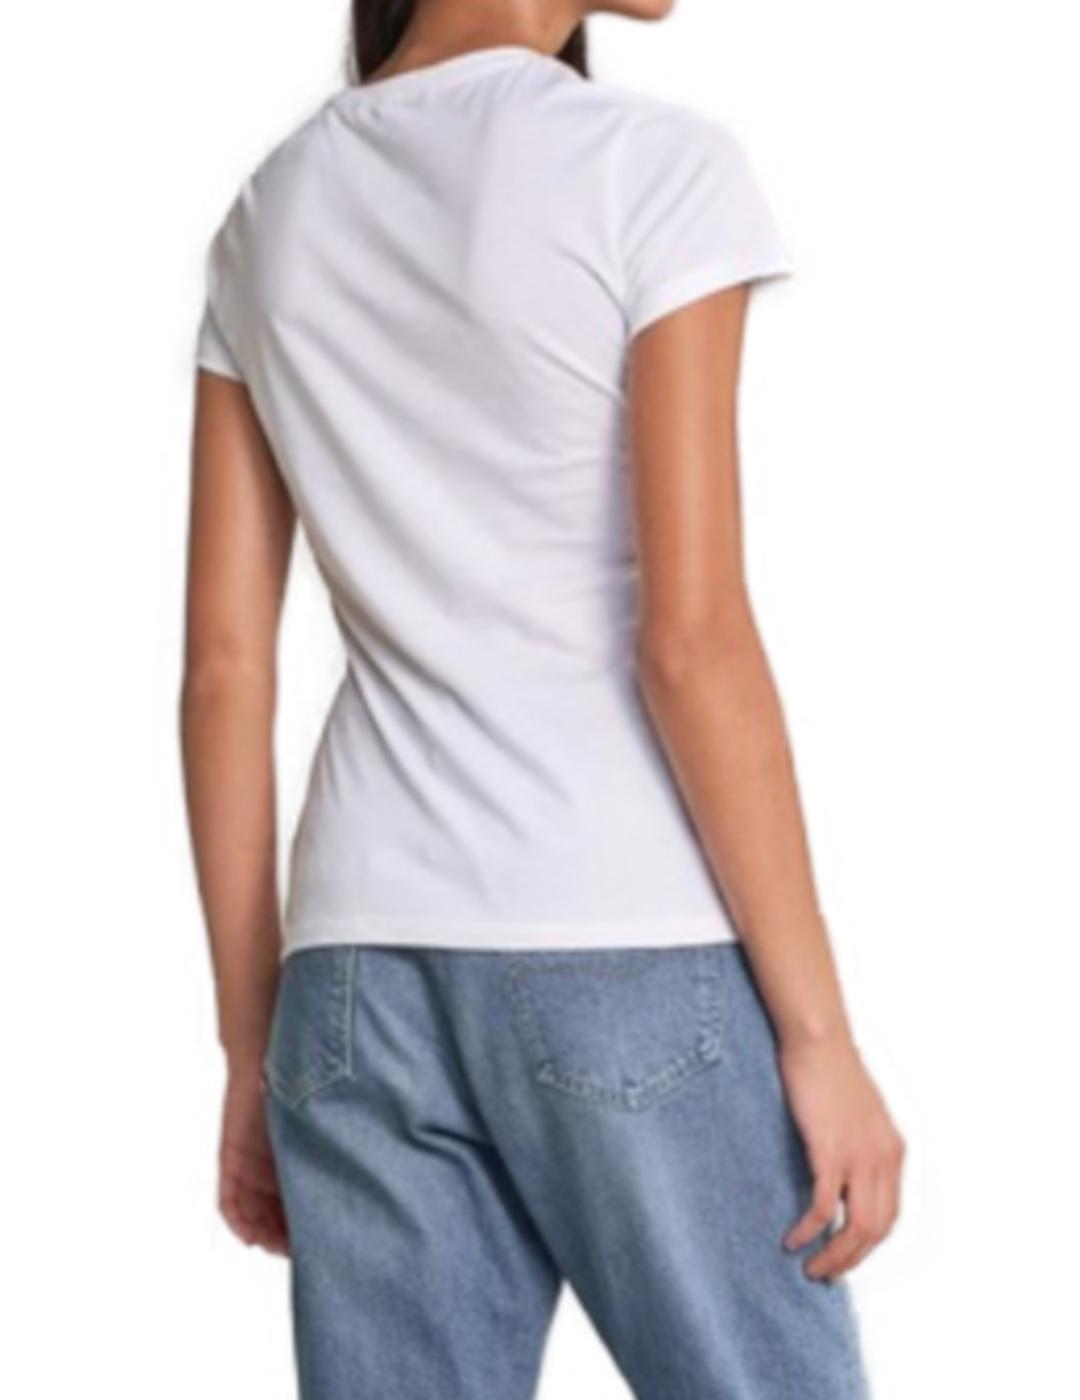 Camiseta Salsa branding blanca para mujer -b